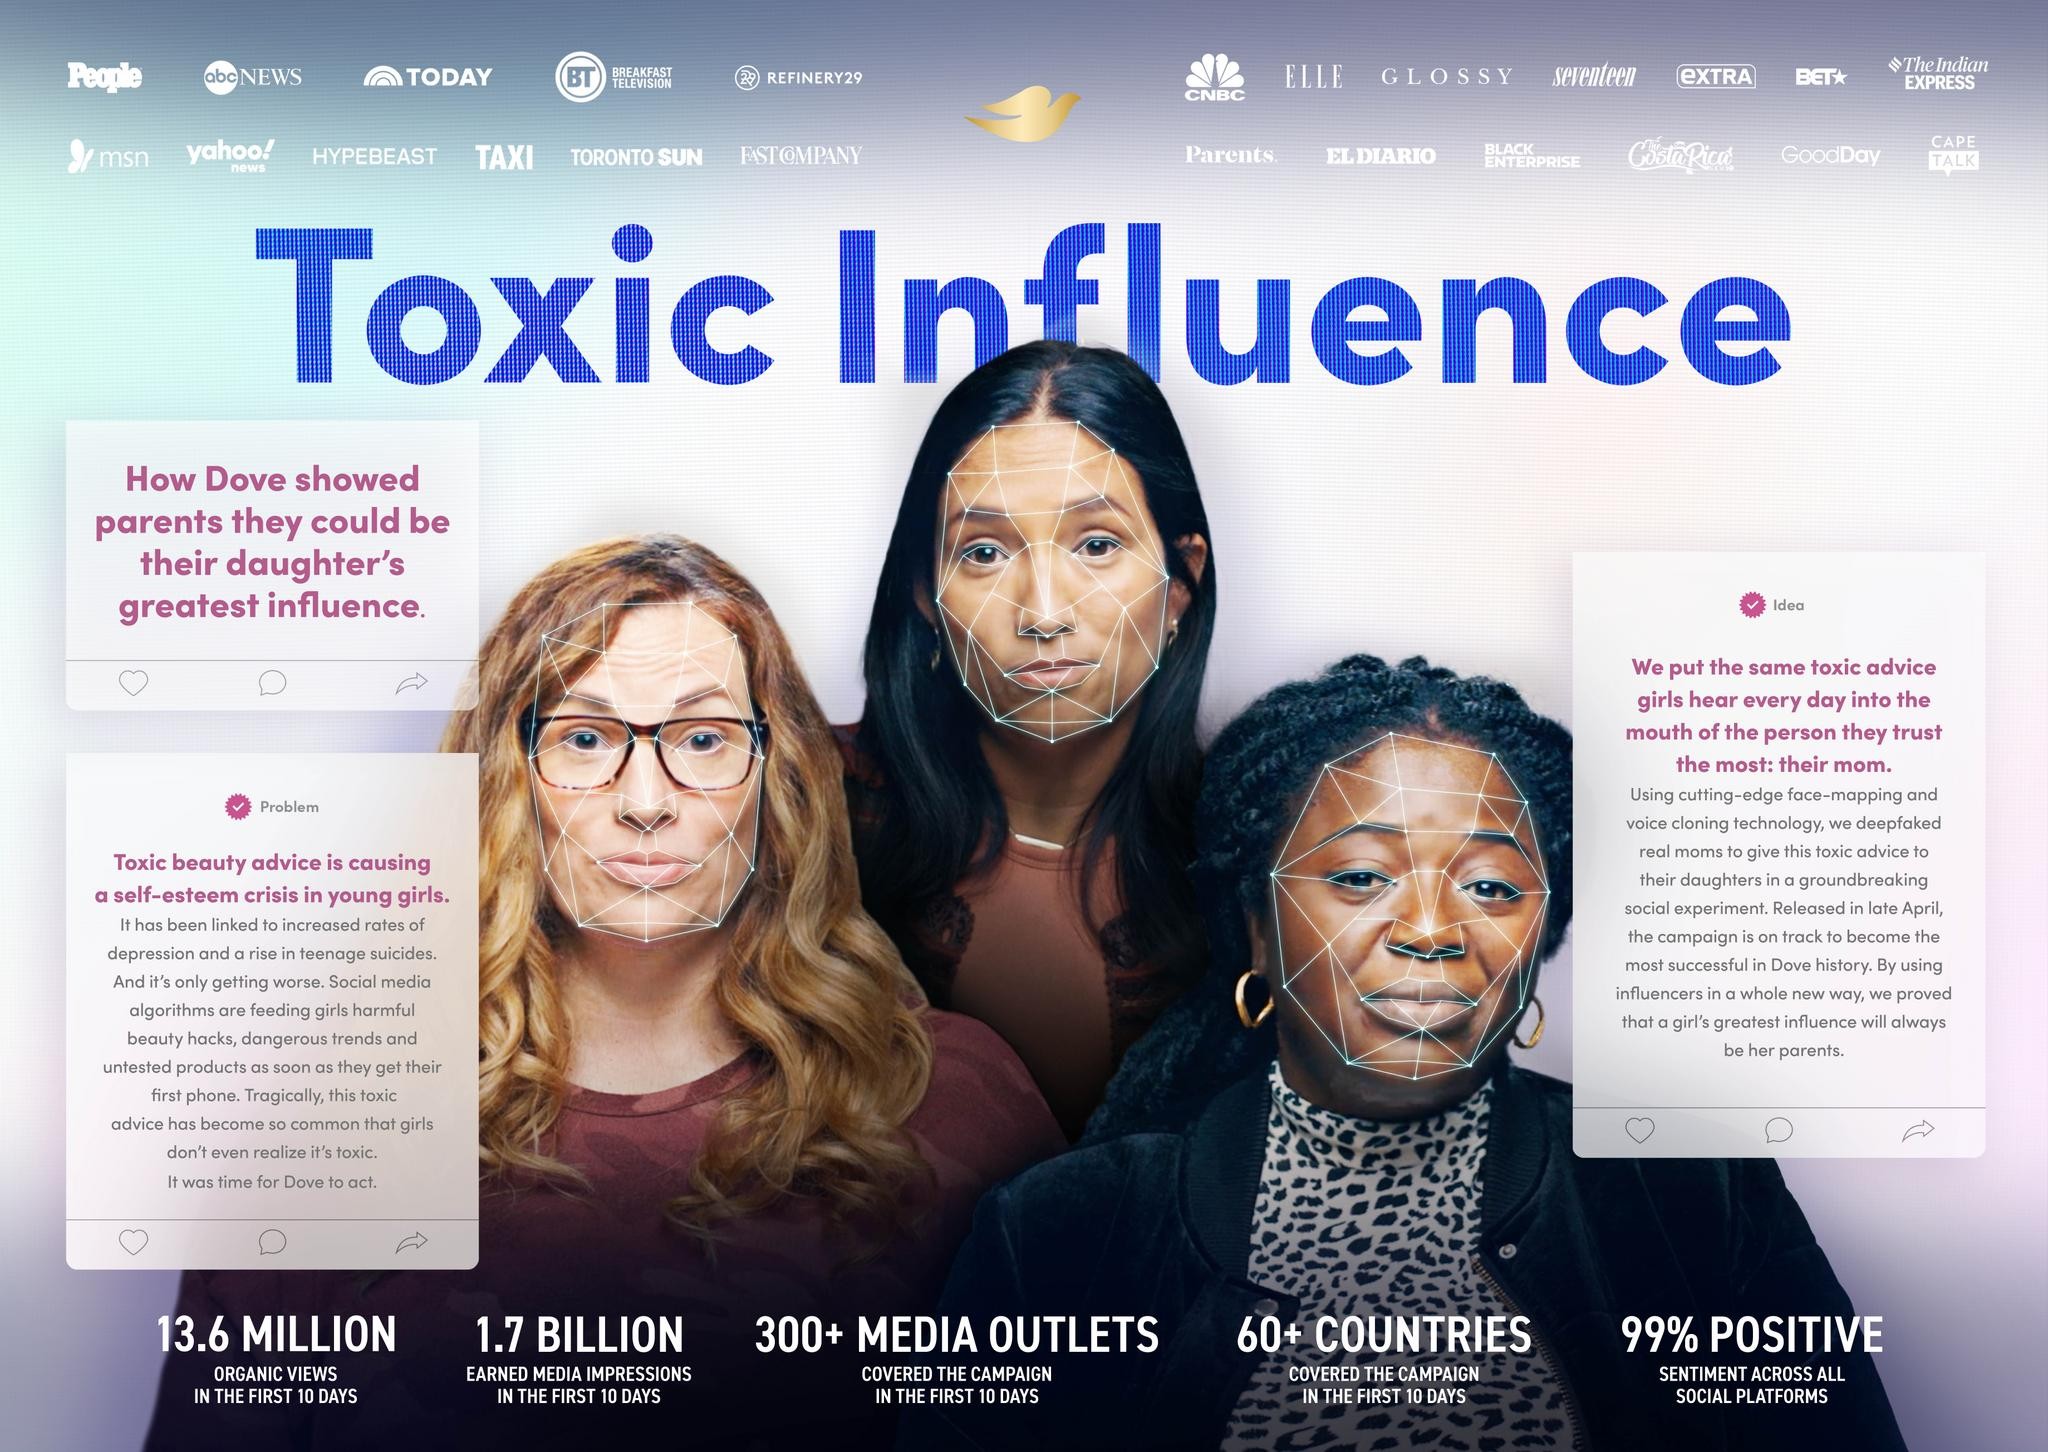 Toxic Influence